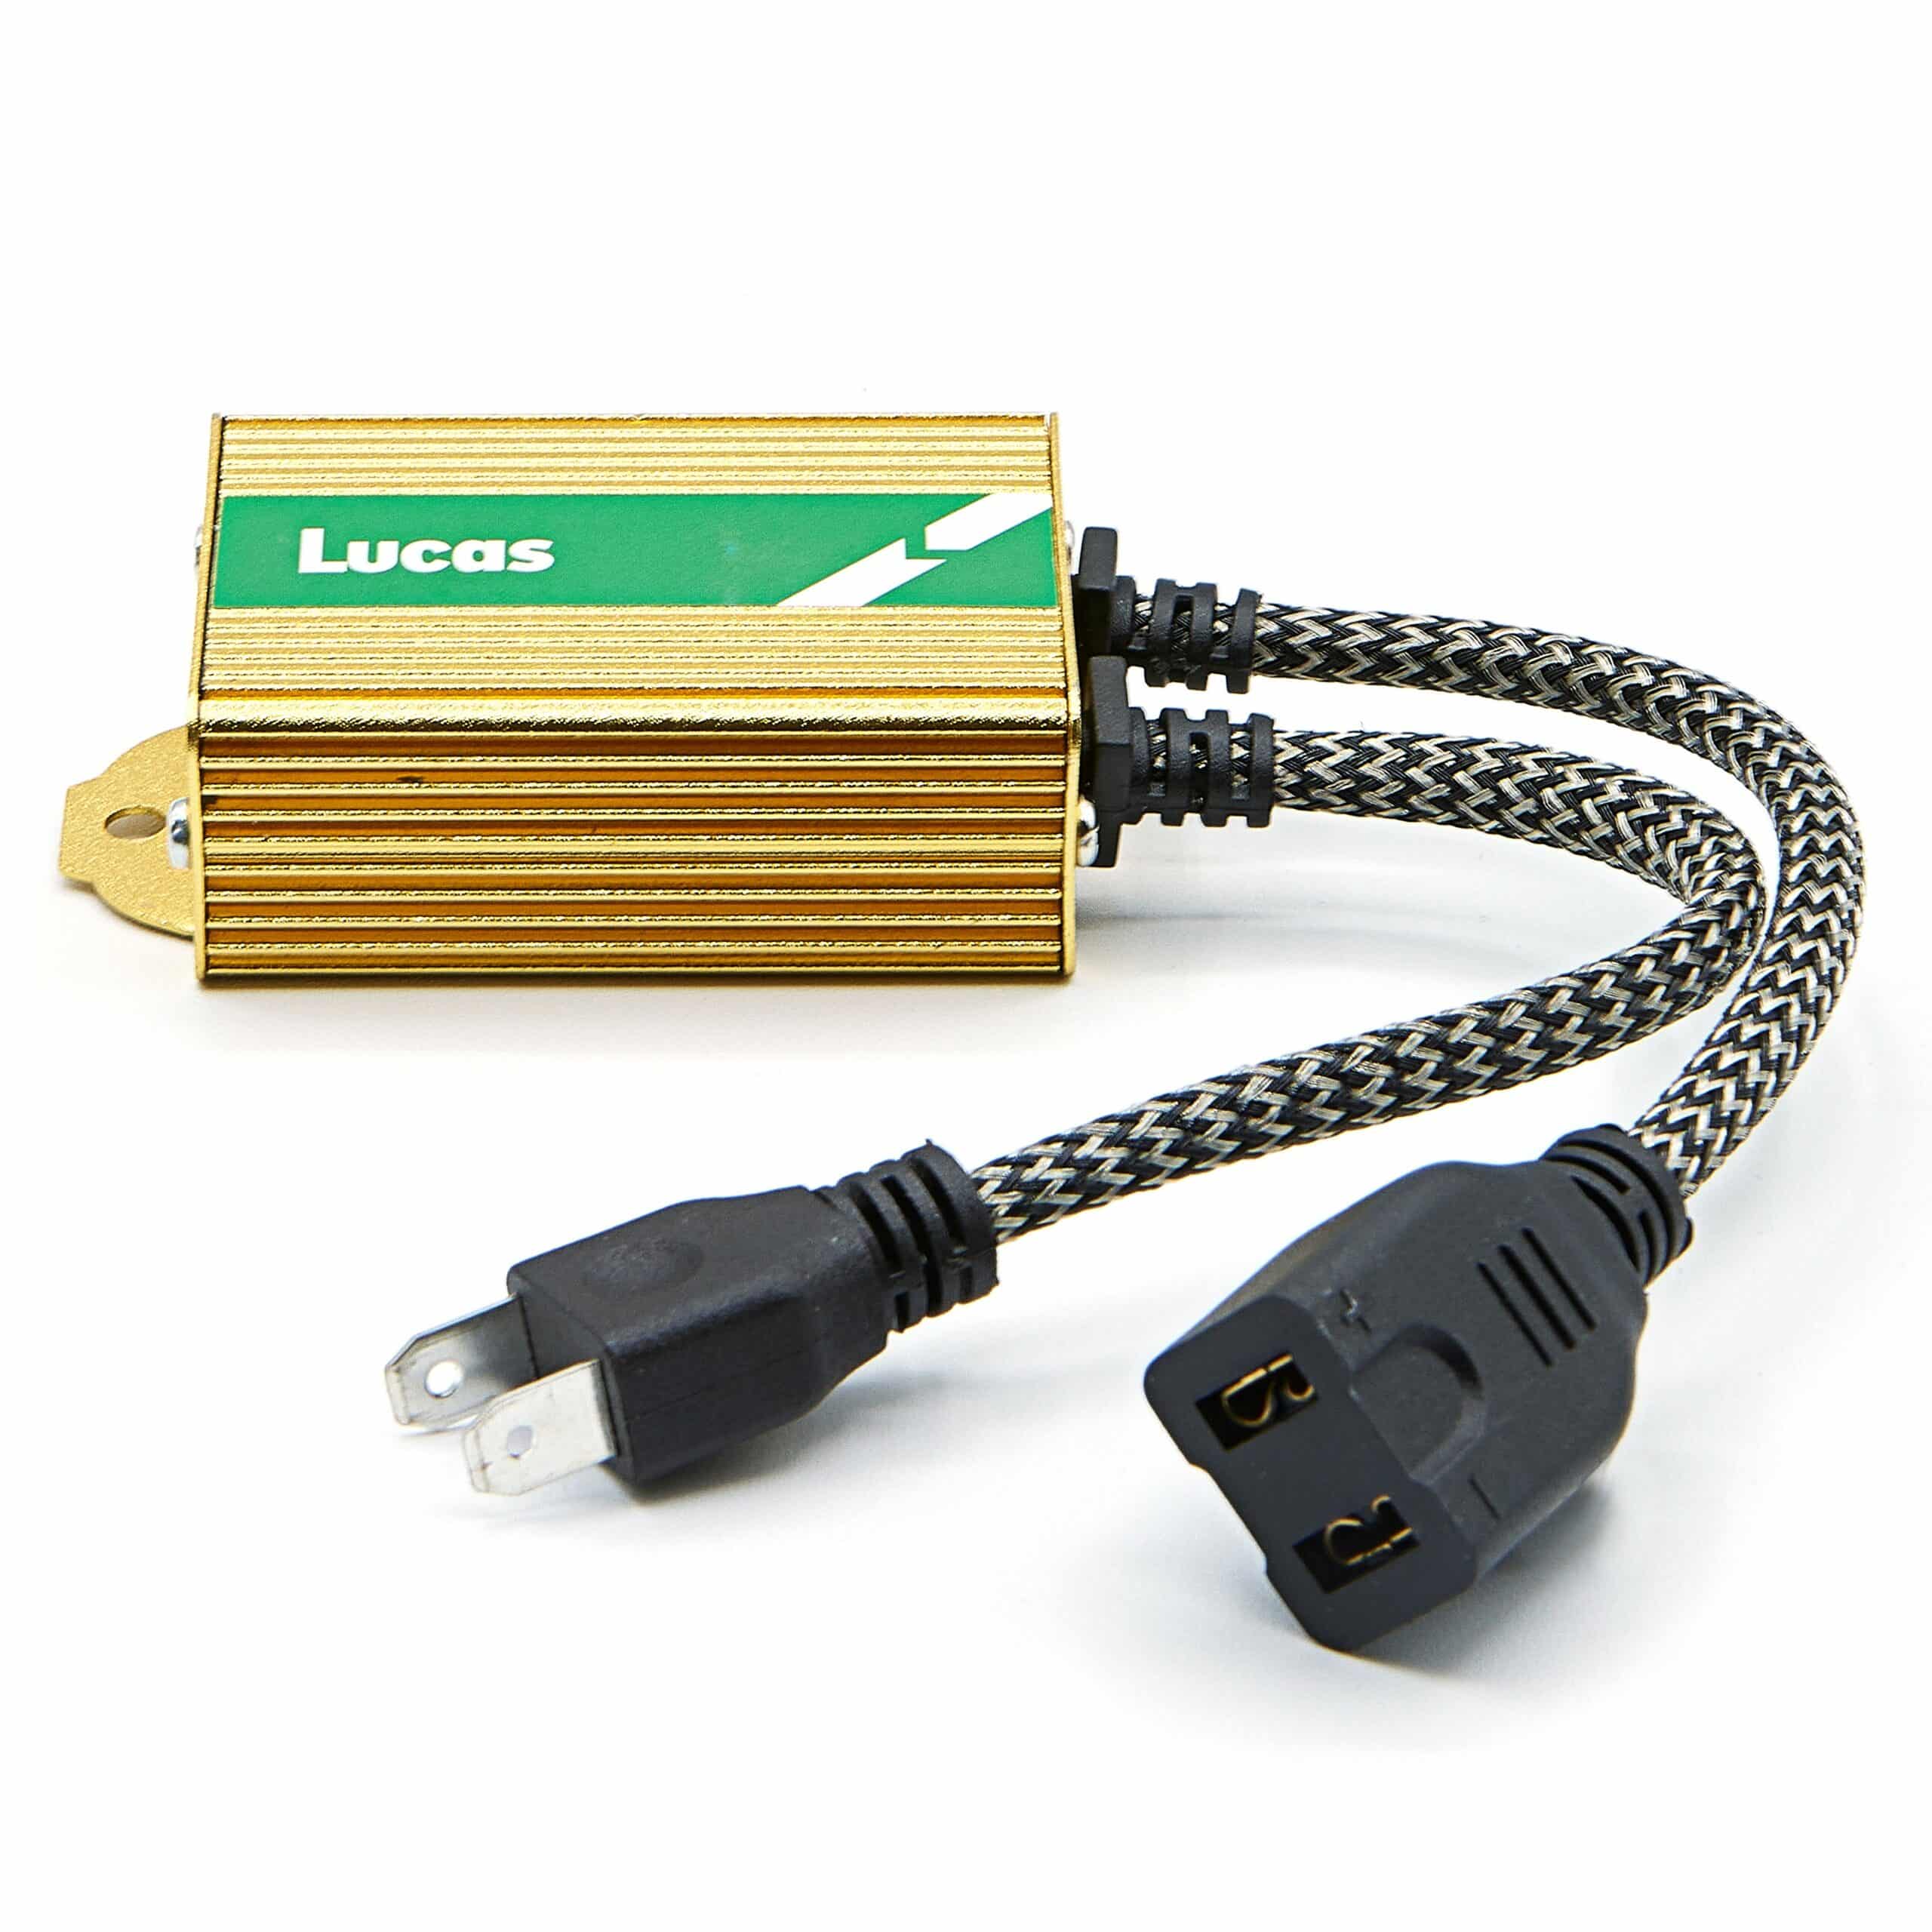 Lucas Lighting,L-9005/9006DE PAIR DECODERS 9005/9006/9012/H10/H12 Applications